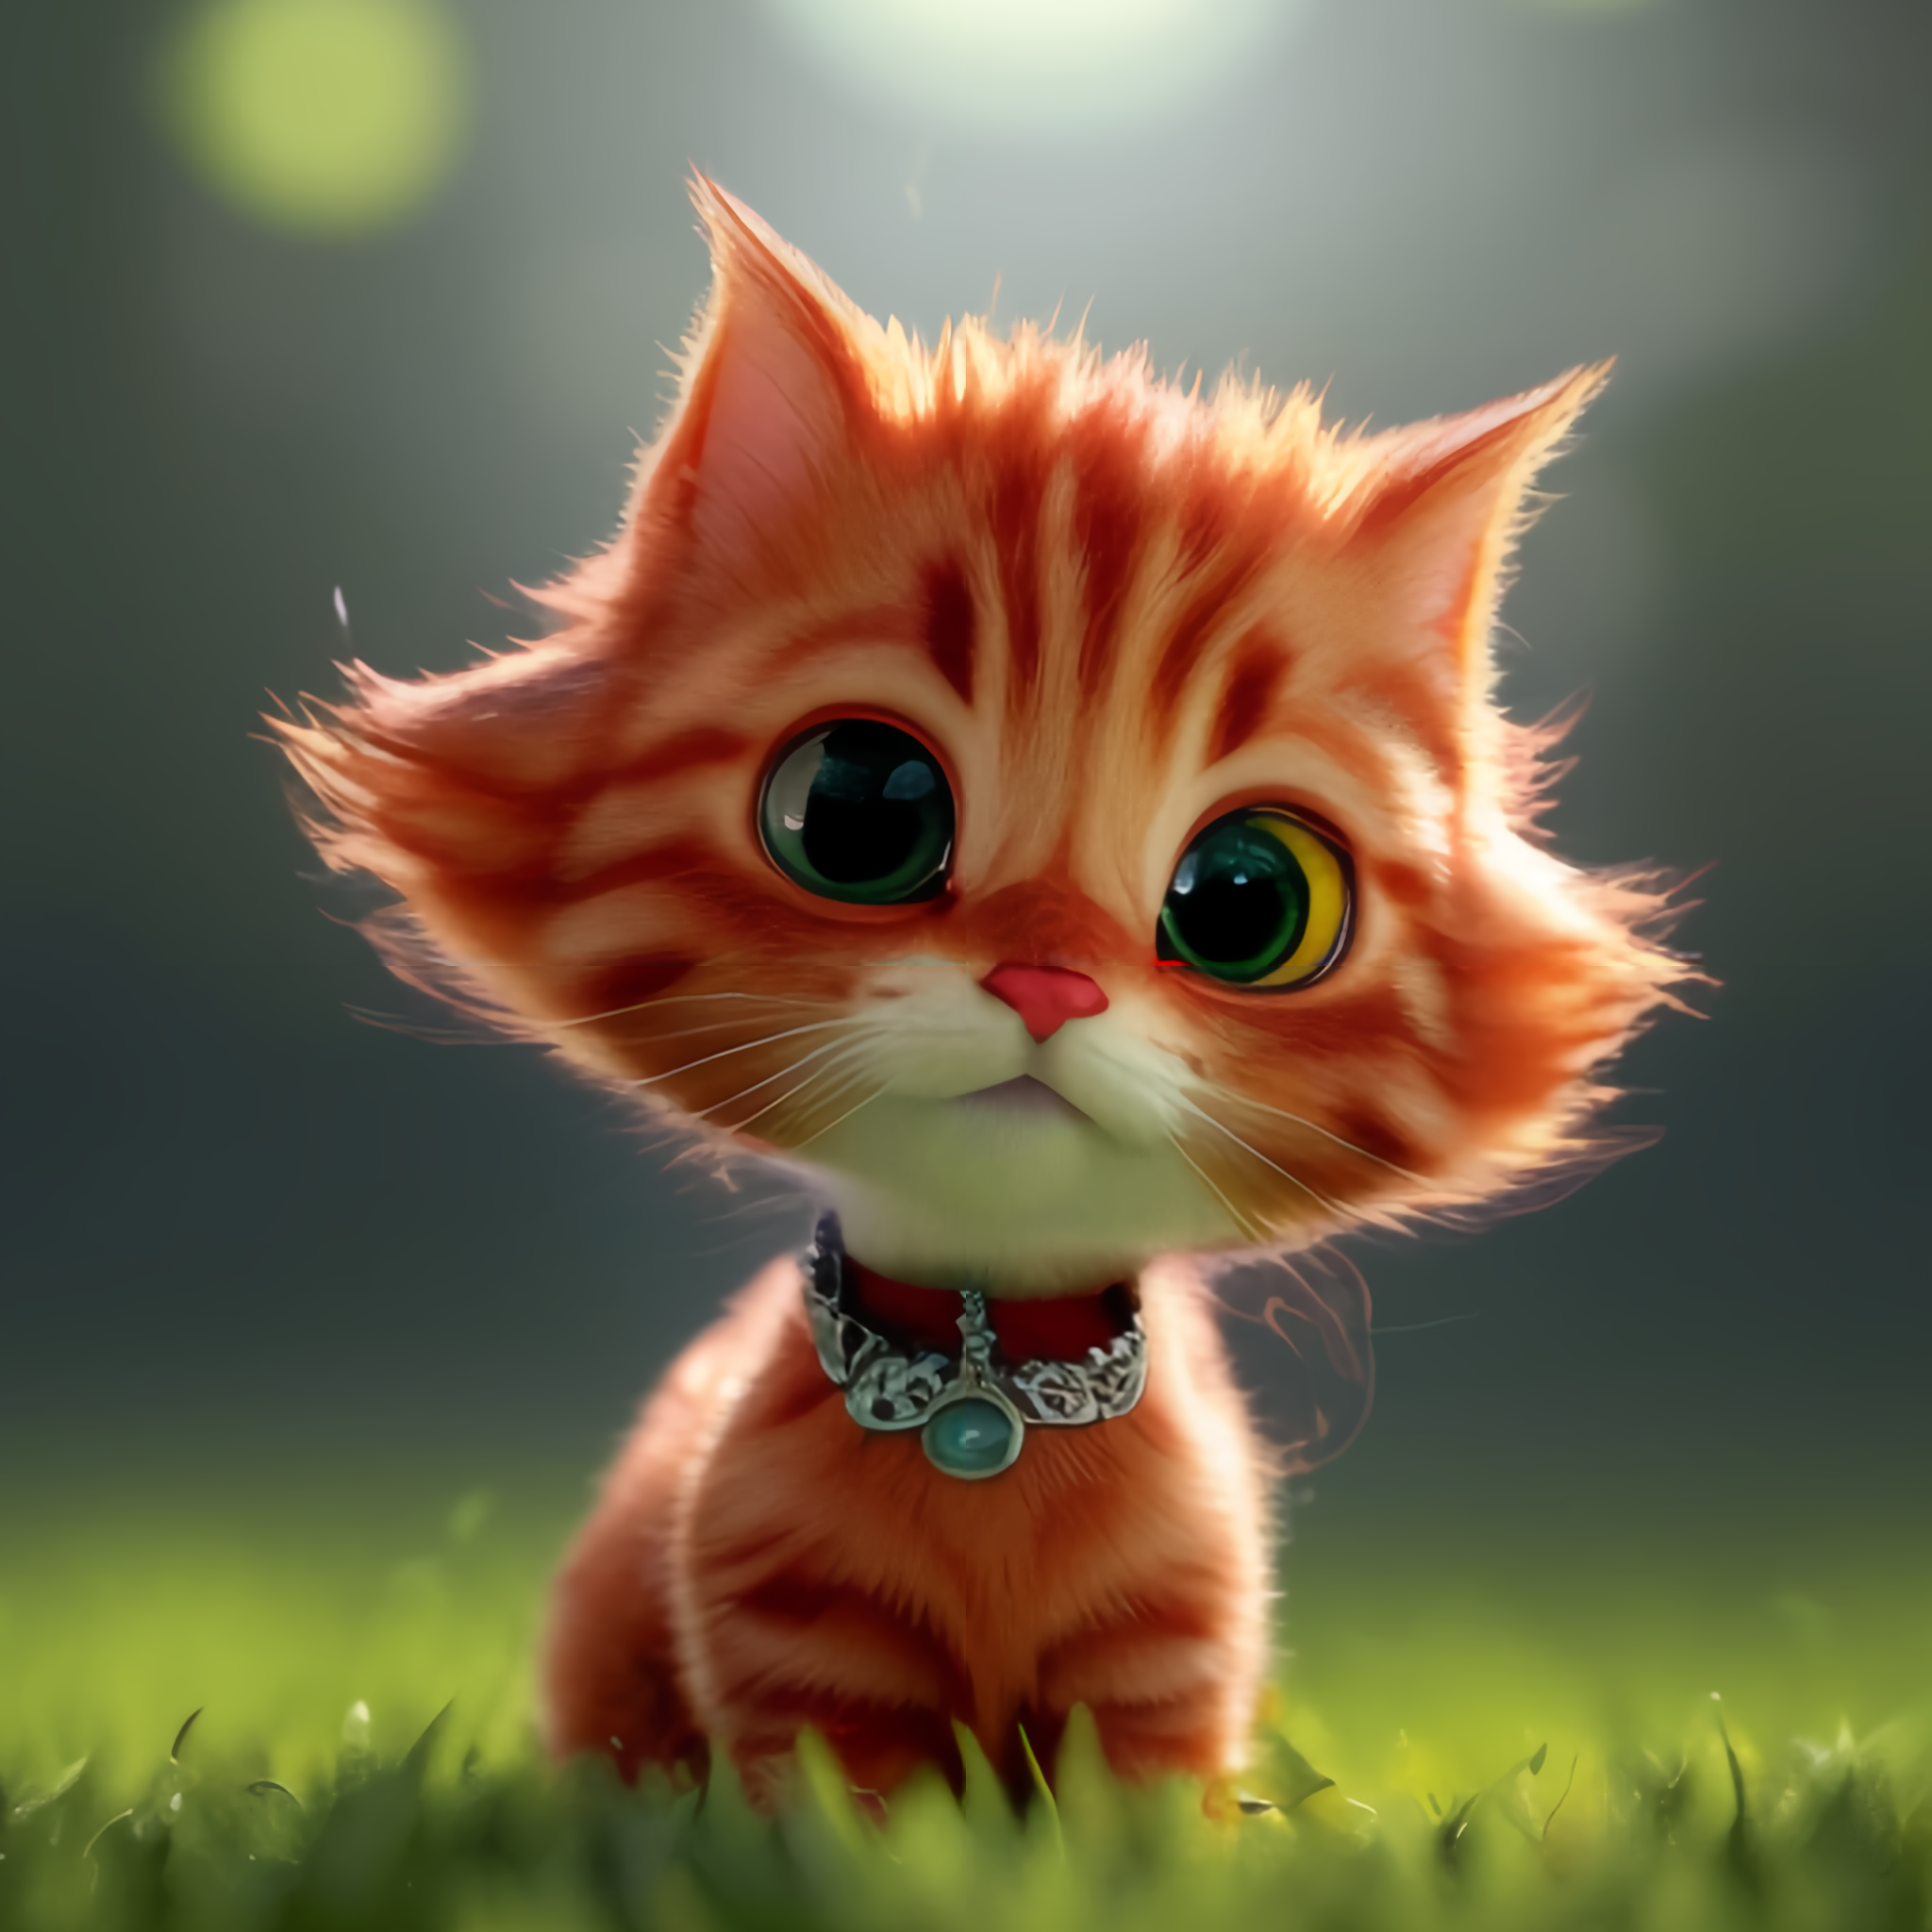 This cat looks so cute. by Chungchi Tsao on Dribbble